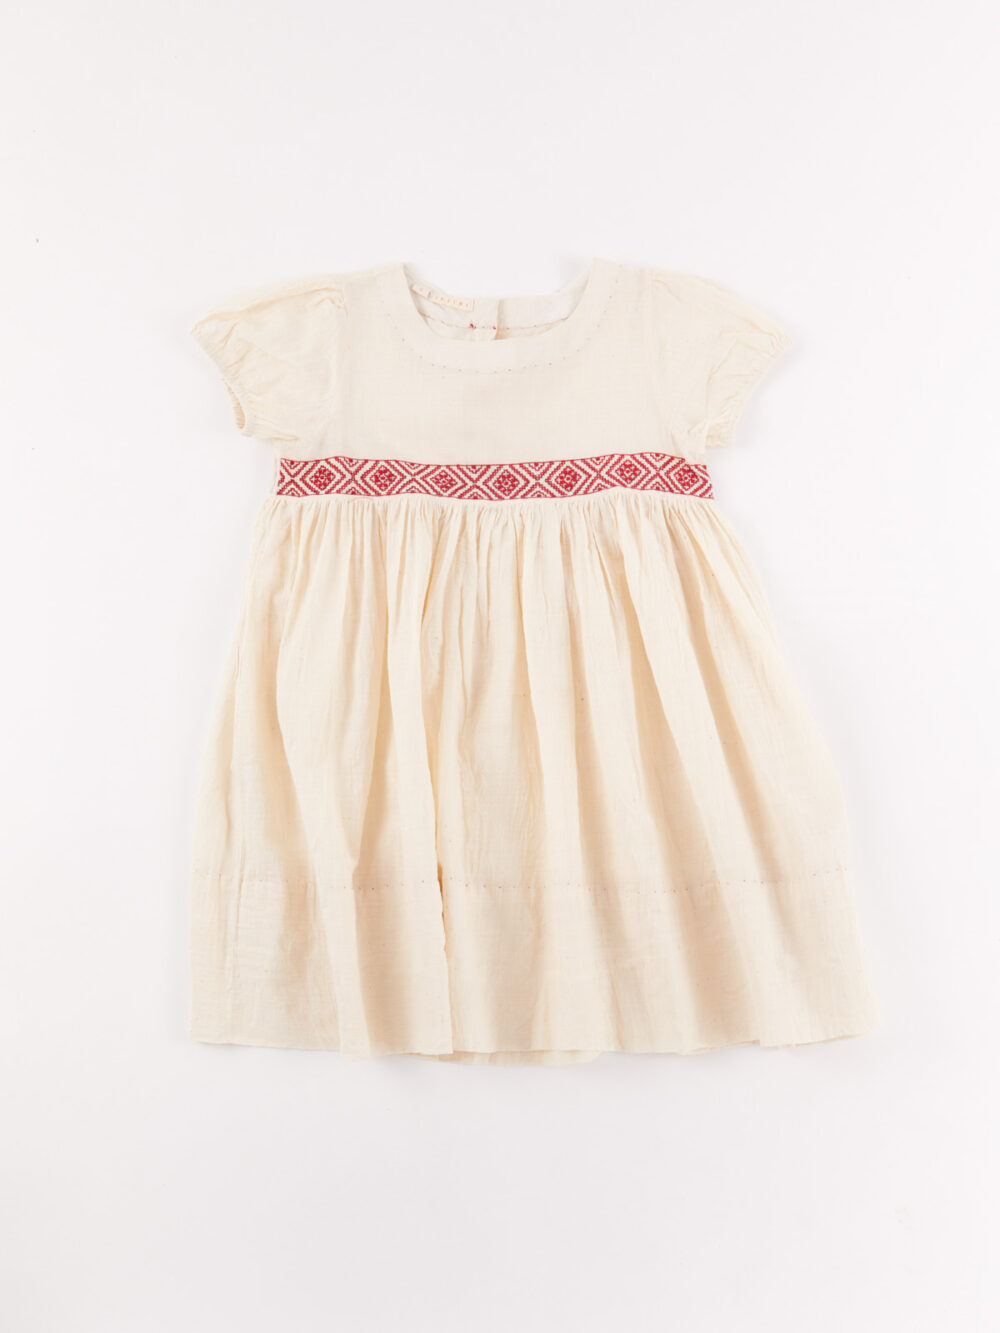 injiri short sleeve baby dress in ivory with red trim